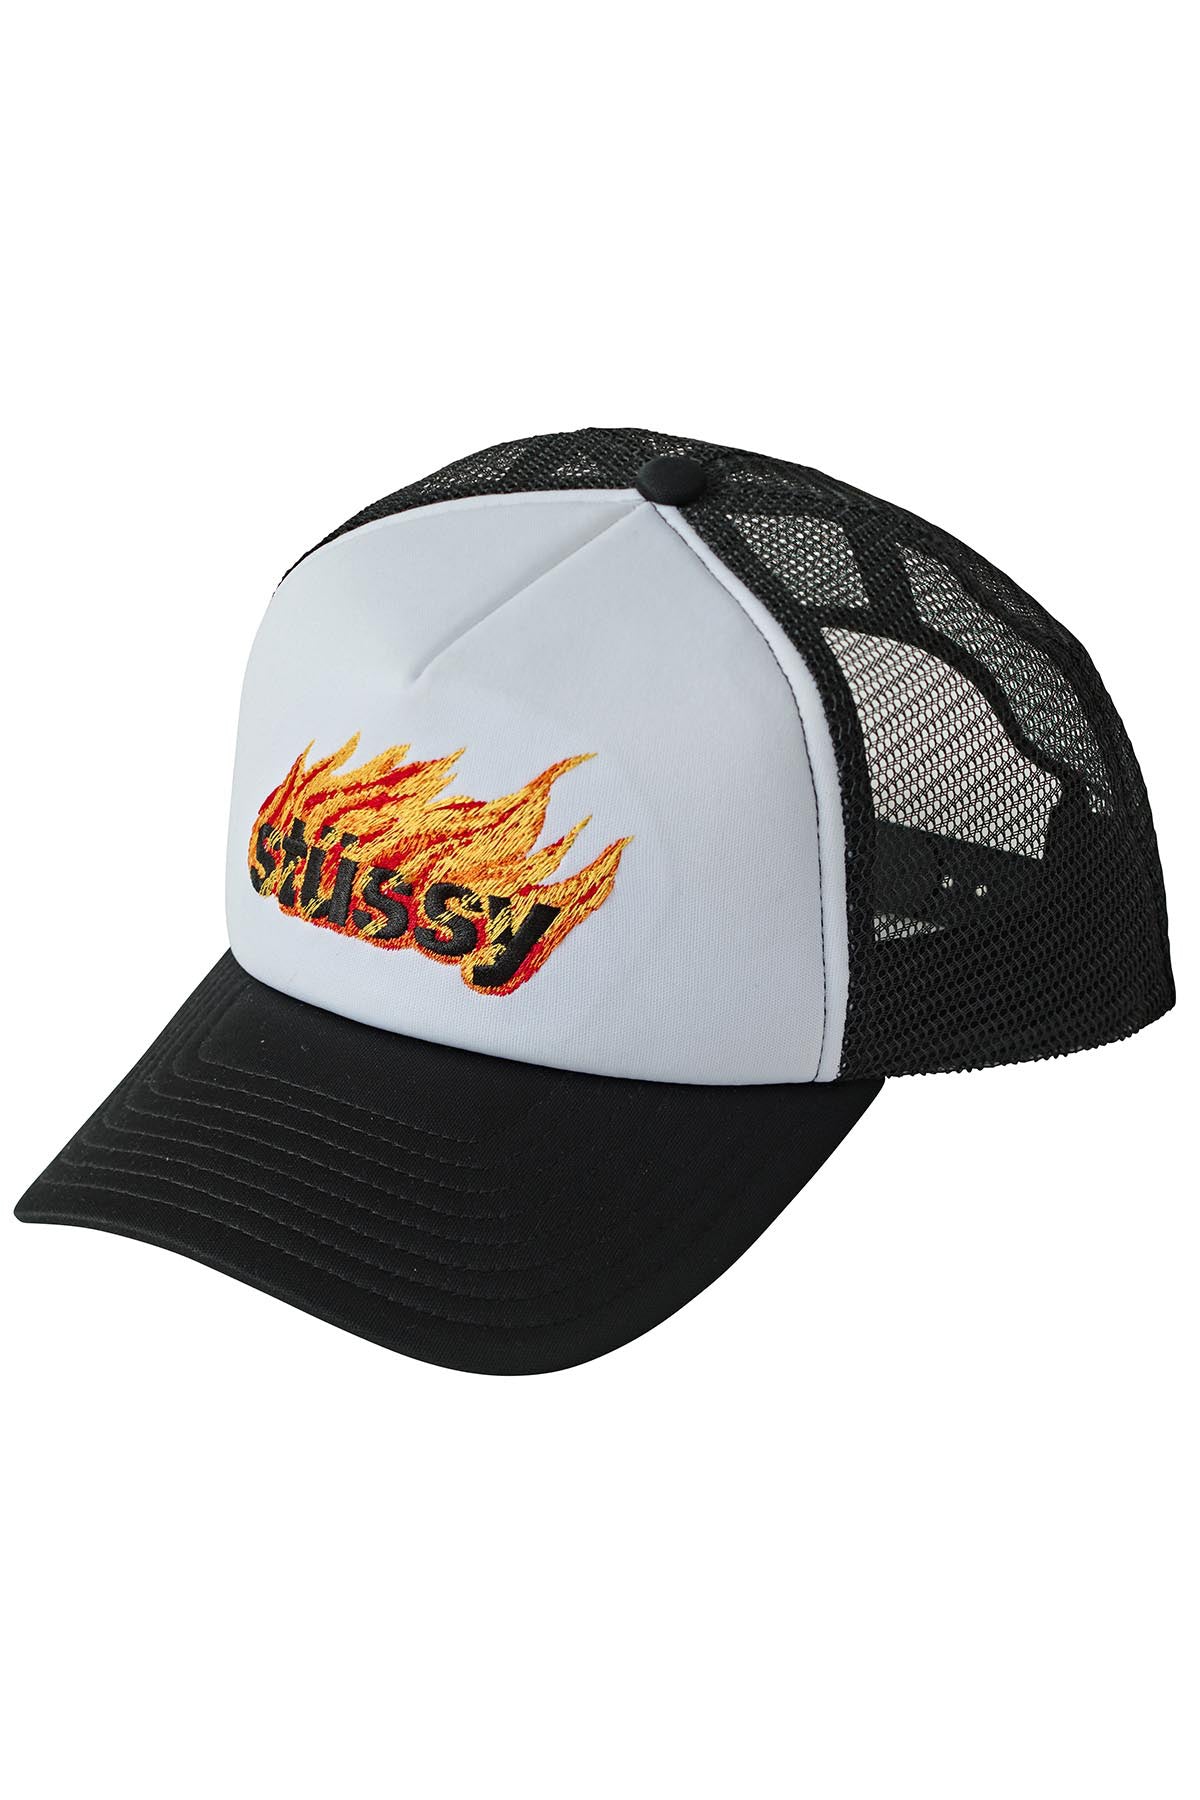 FLAMES TRUCKER CAP - White/Black